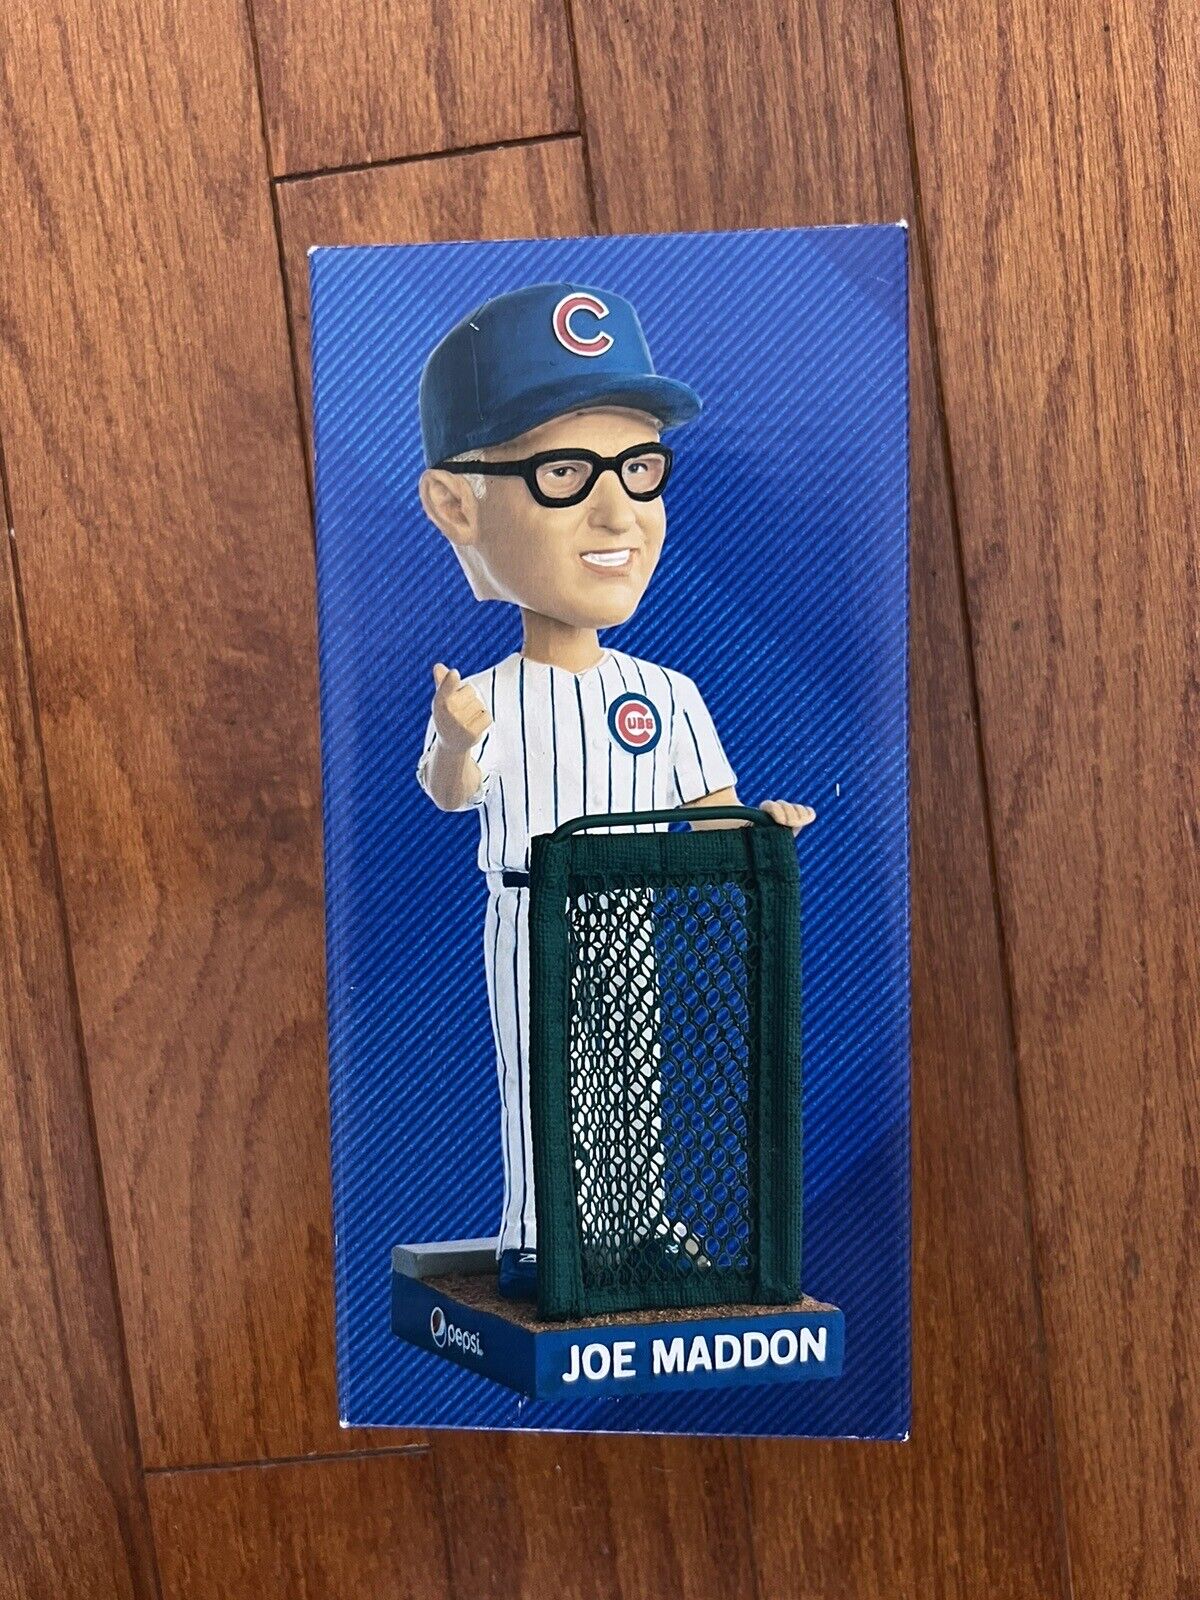 Joe Maddon #70 Manager Chicago Cubs 2015 National League MOTY Pepsi Bobblehead